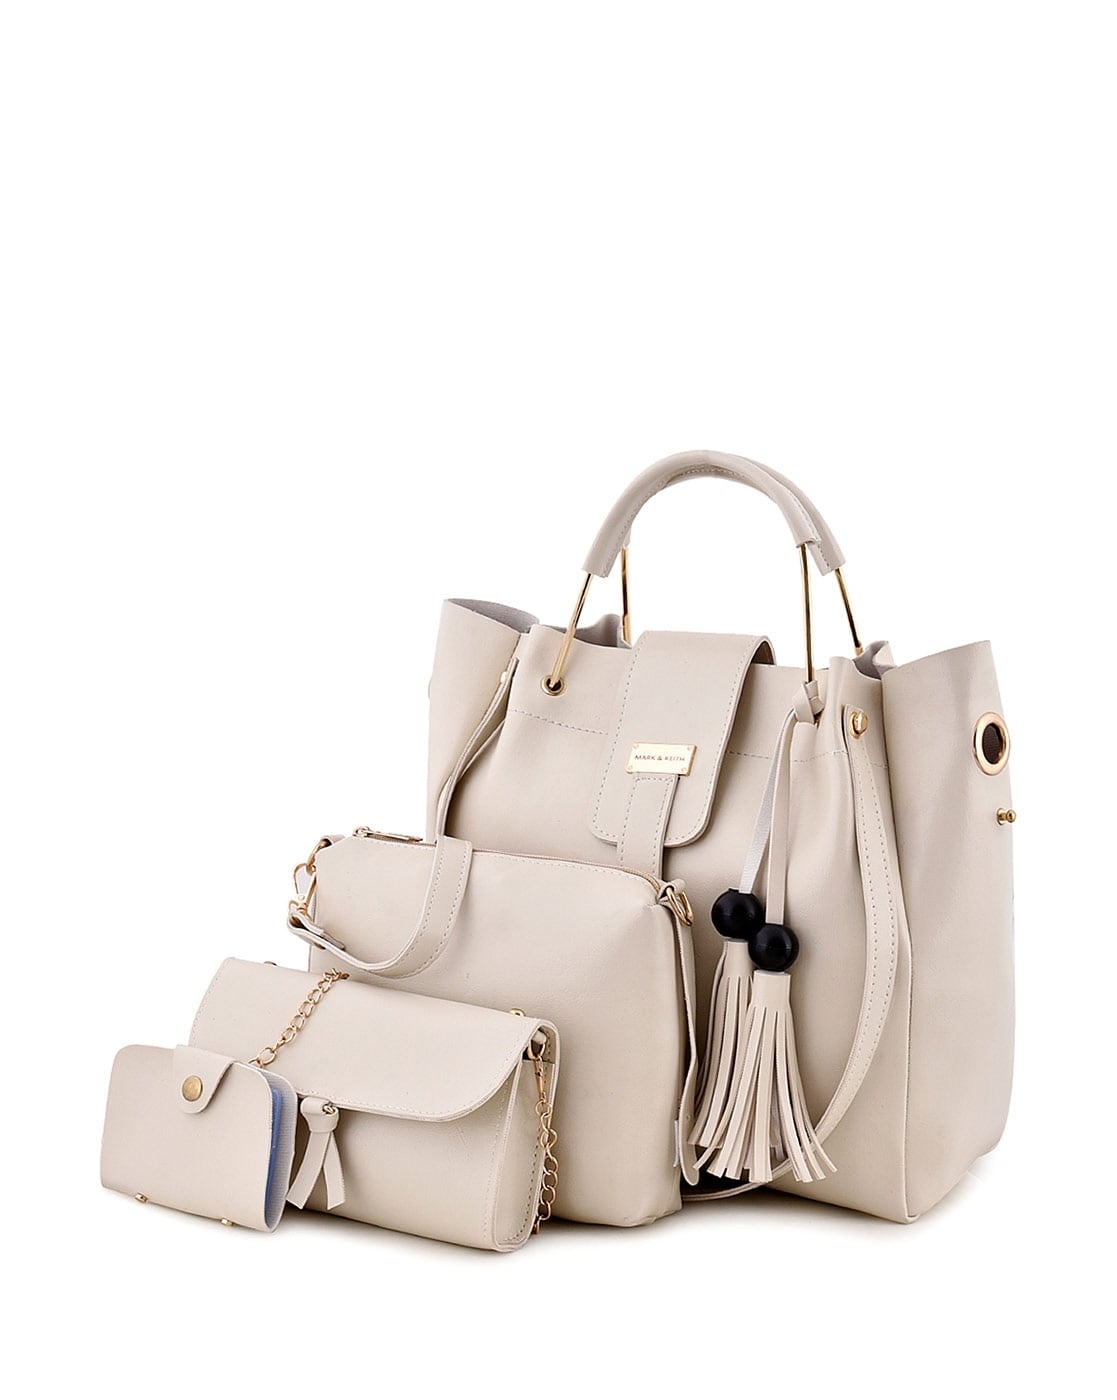 Handbags Under $200 - Life with Emily